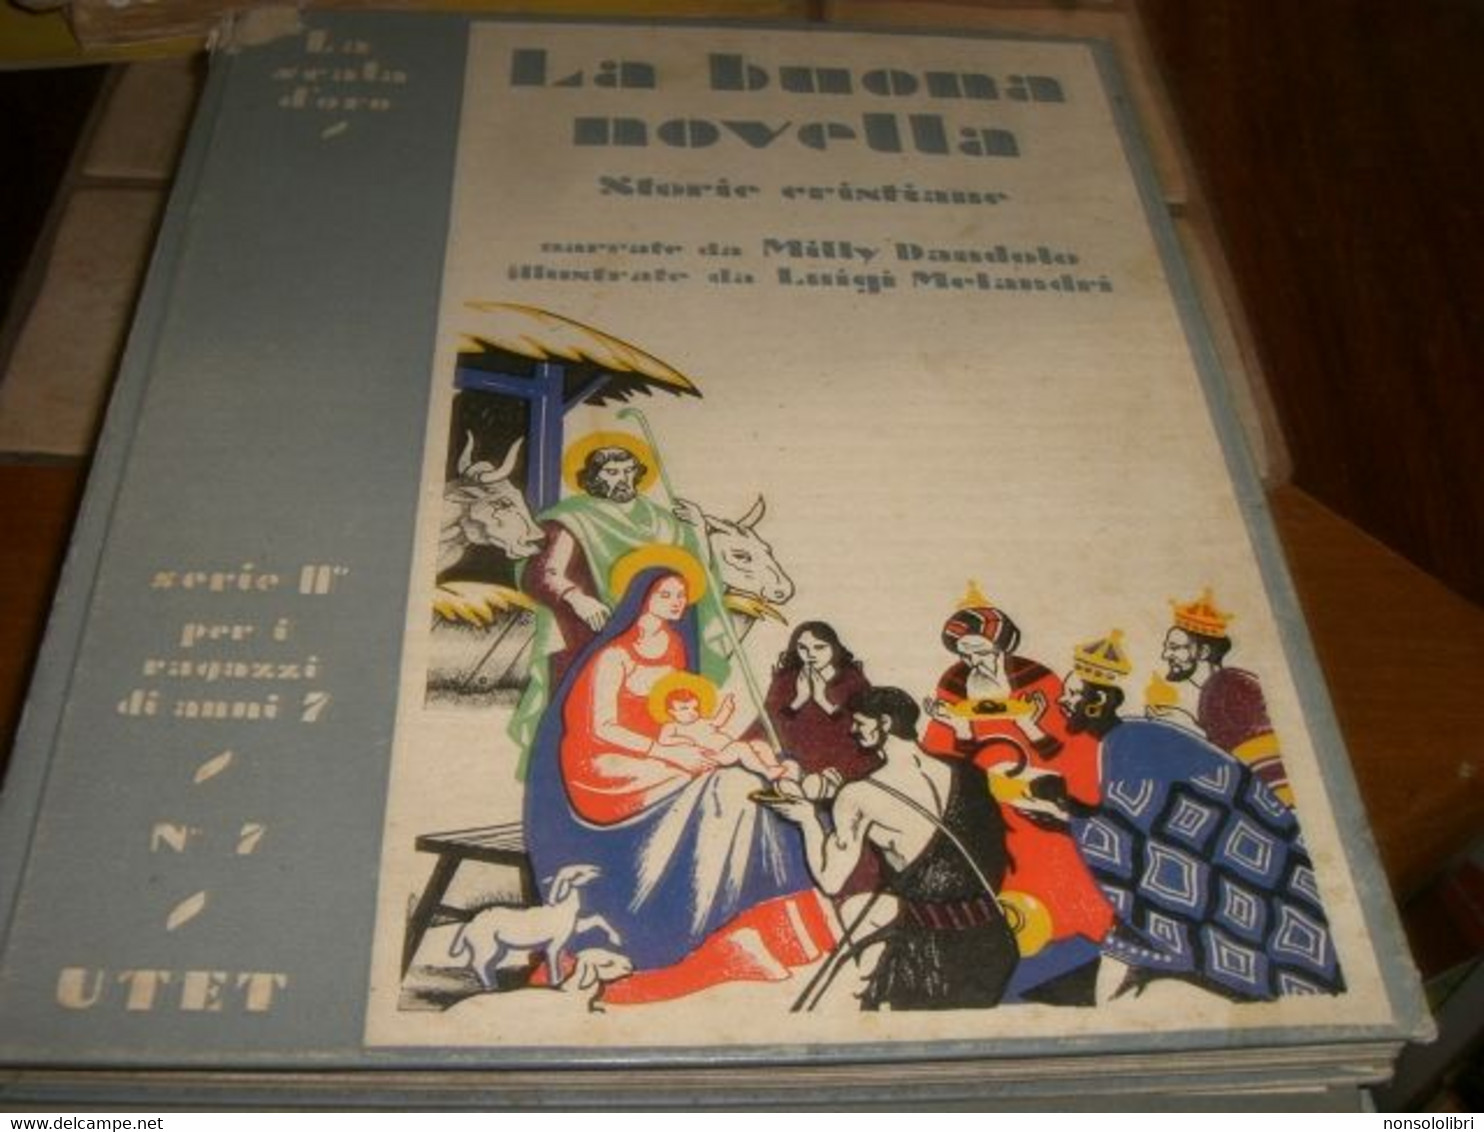 LIBRO "LA BUONA NOVELLA " SCALA D'ORO-SERIE II N.7 PER I RAGAZZI DI ANNI 7-ILLMELANDRI 1933 -COPERTINA RIGIDA - Sagen En Korte Verhalen